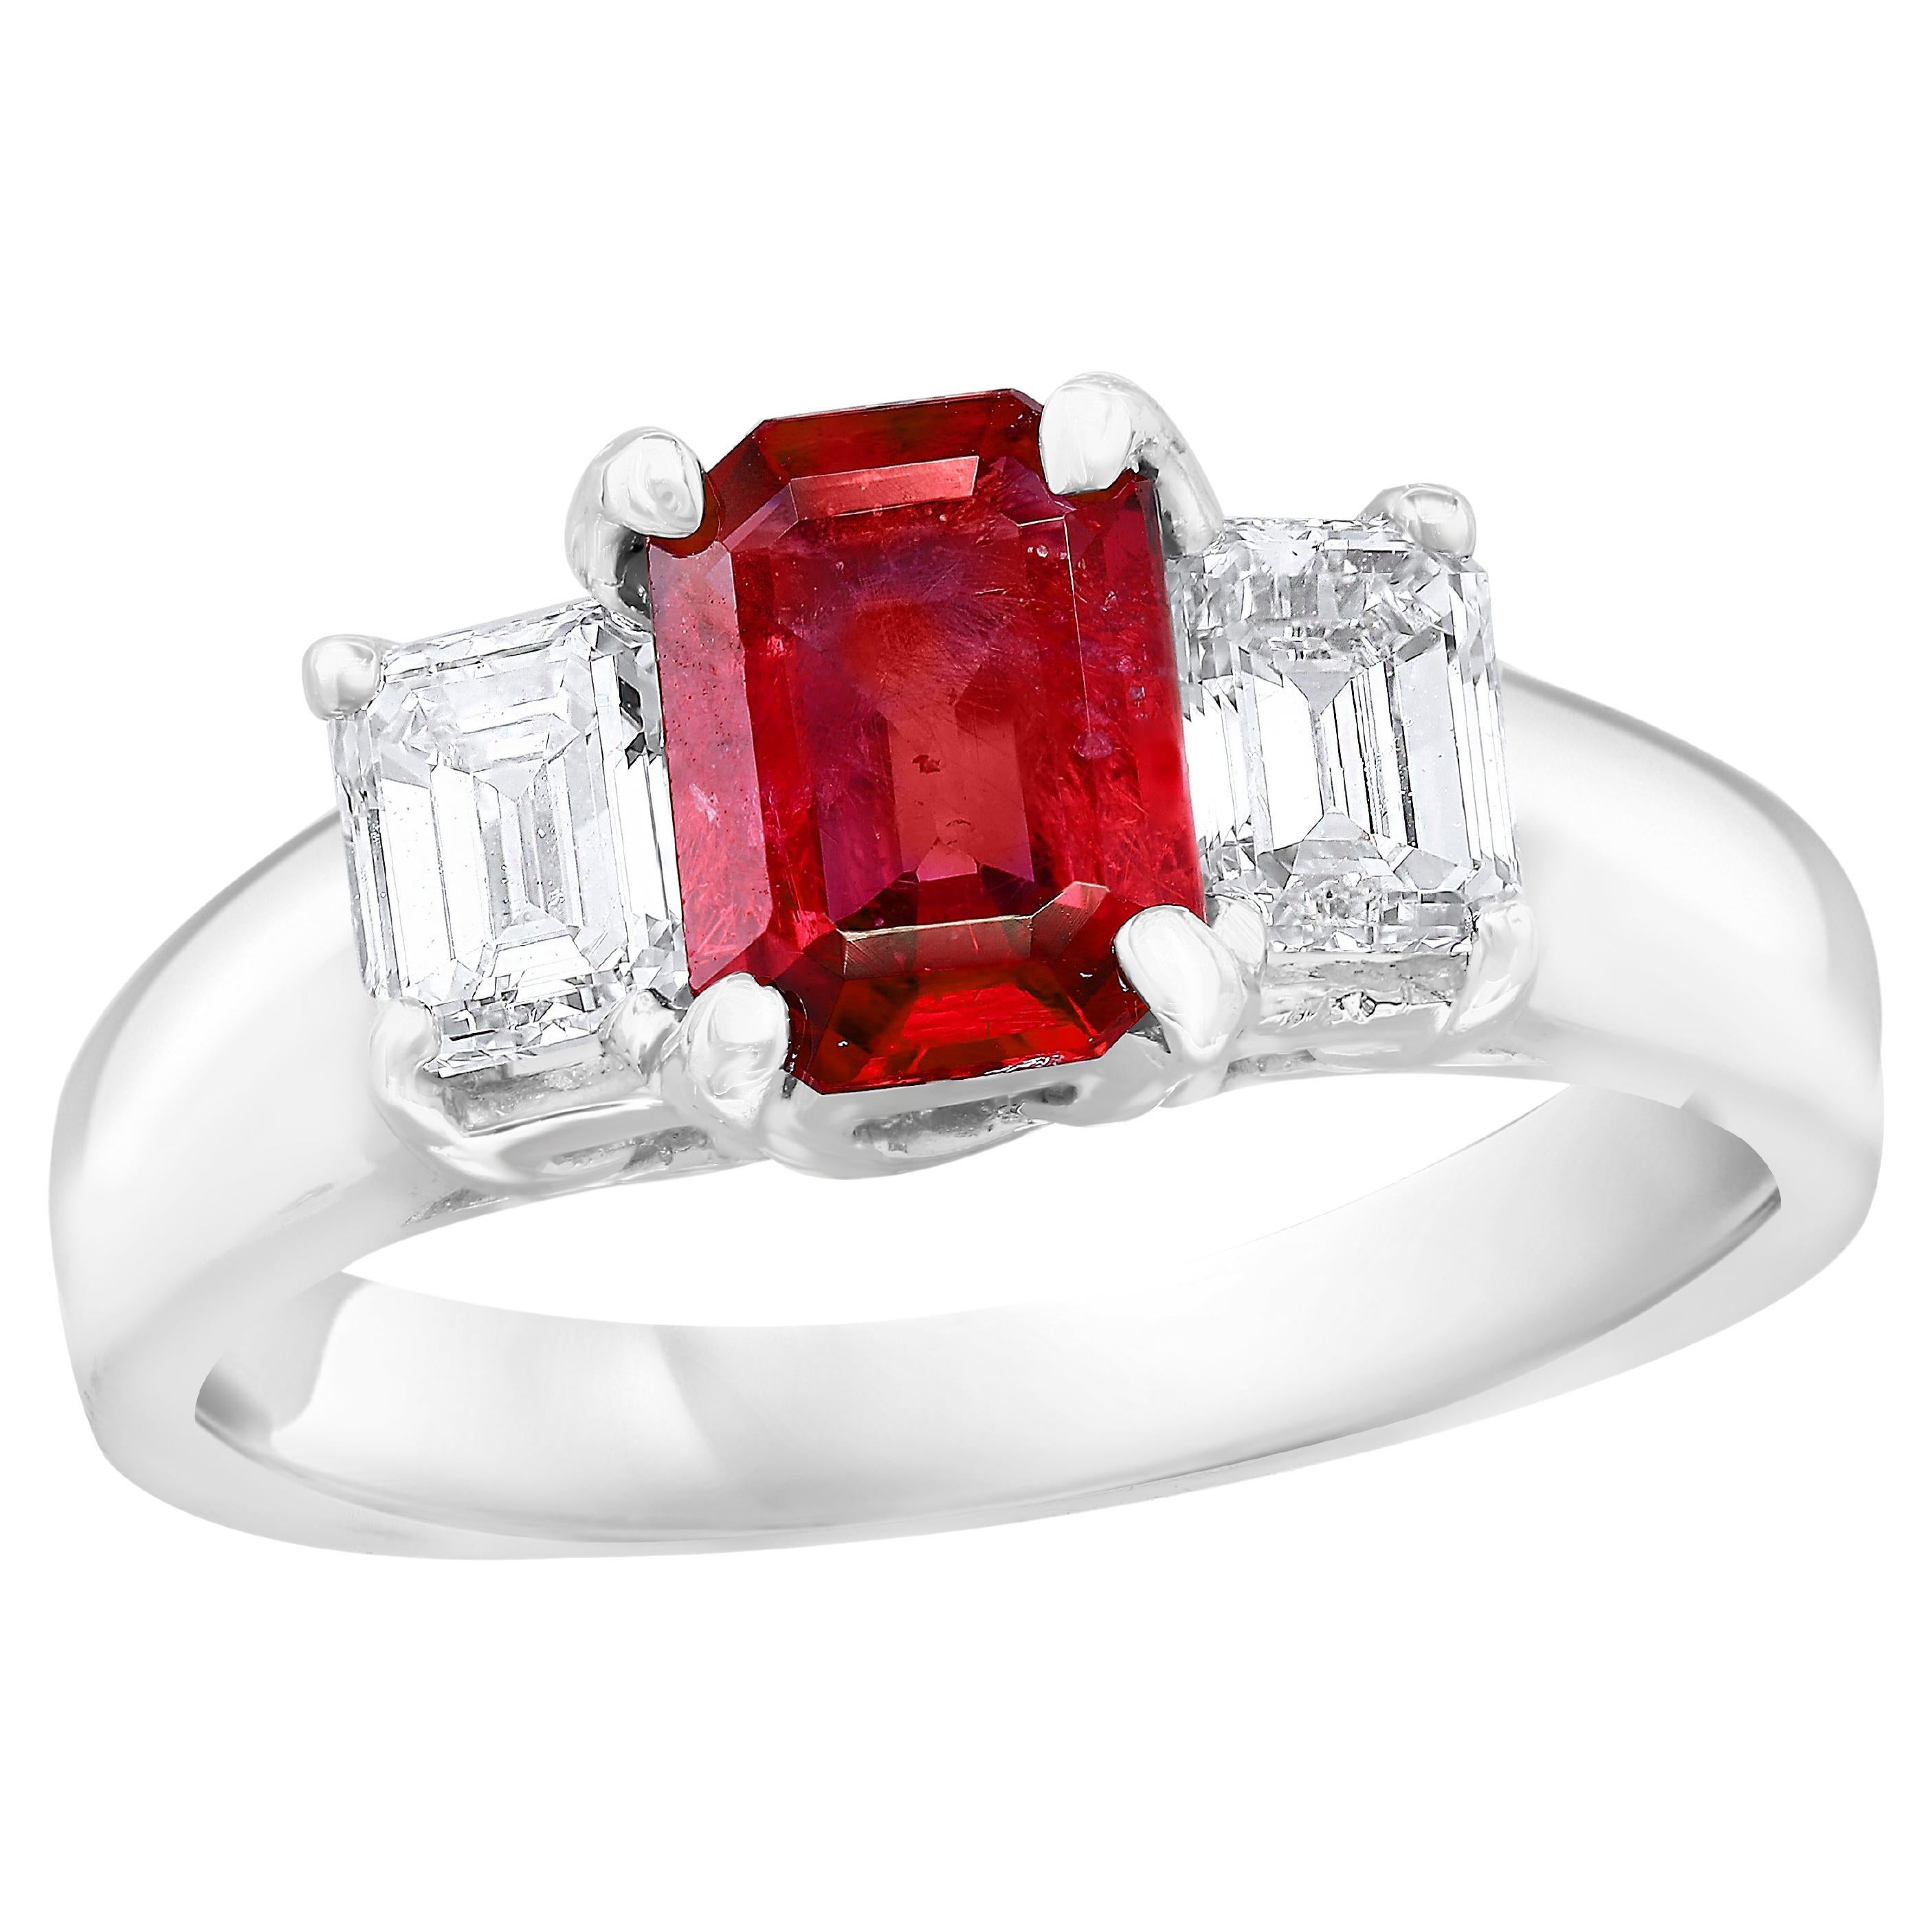 1.26 Carat Emerald Cut Ruby and Diamond Three-Stone Engagement Ring in Platinum